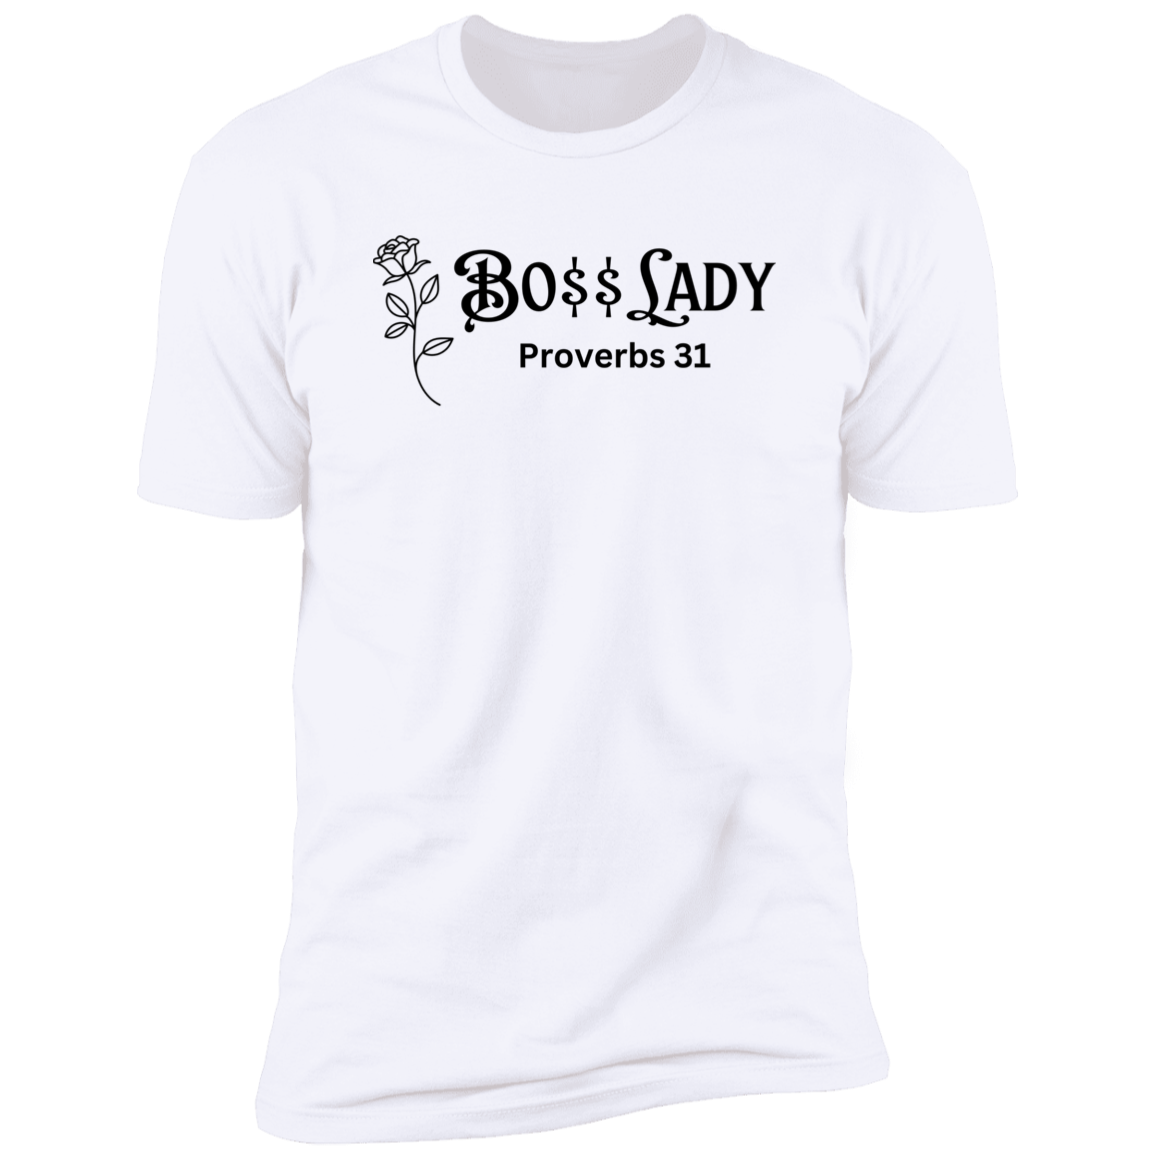 Boss Lady Premium Short Sleeve T-Shirt